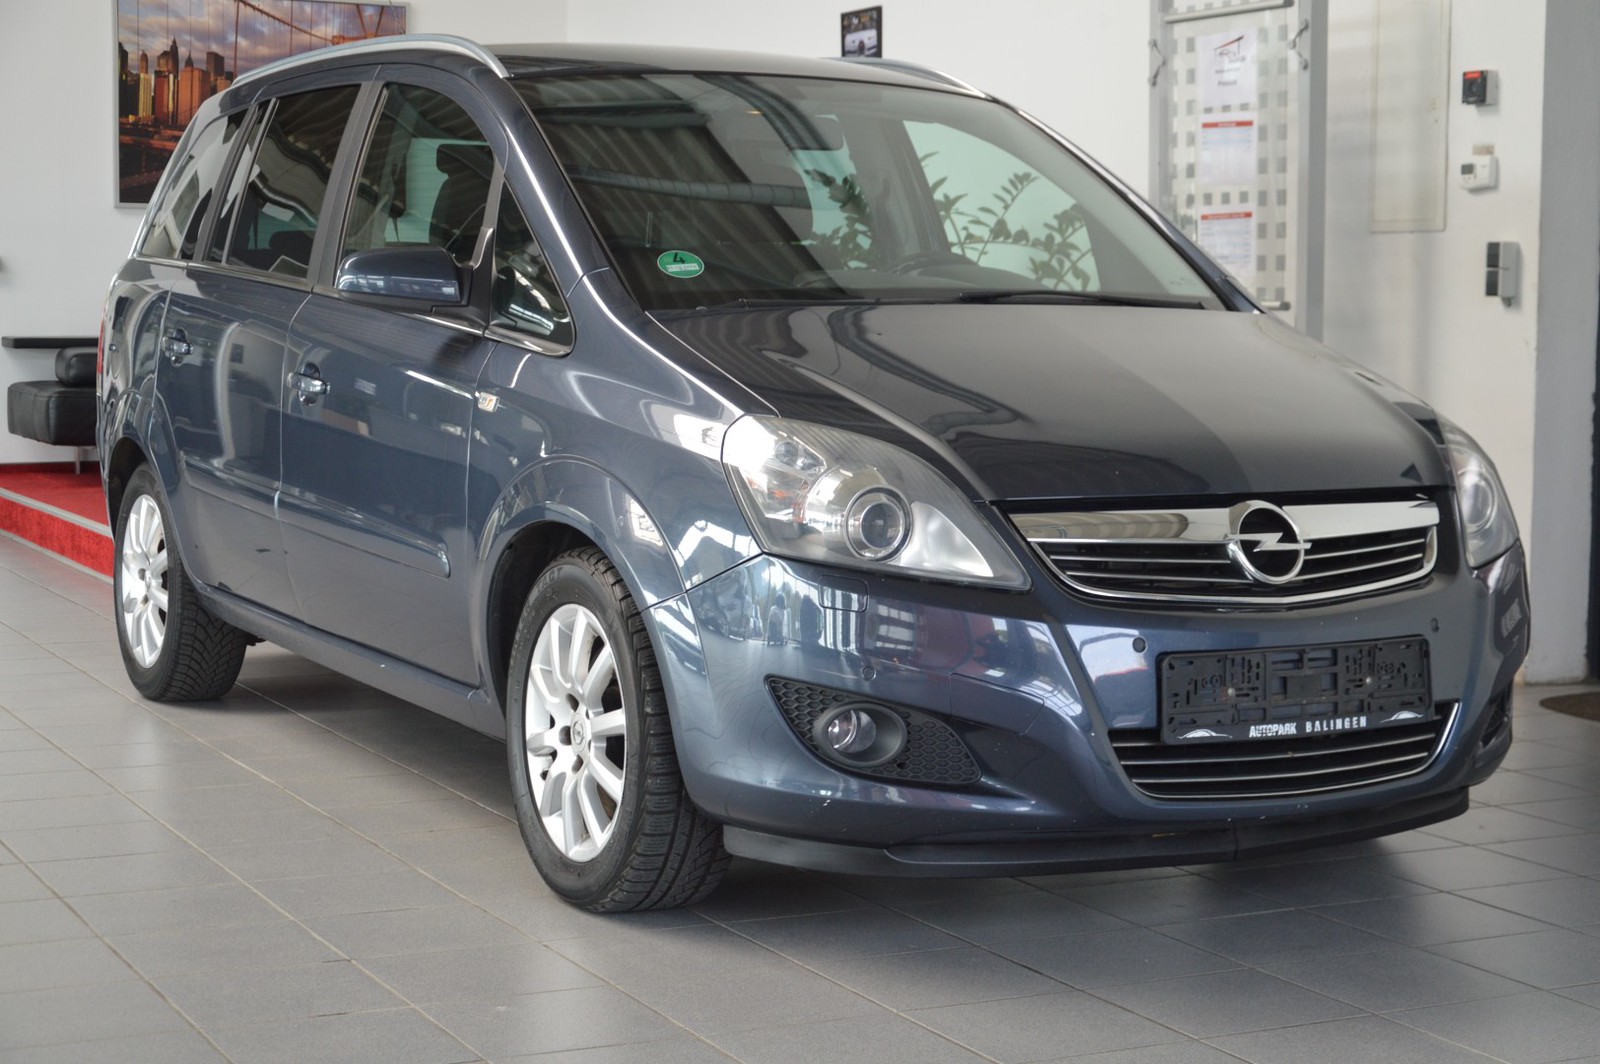 Opel Zafira B Innovation gebraucht kaufen in Balingen Preis 2990